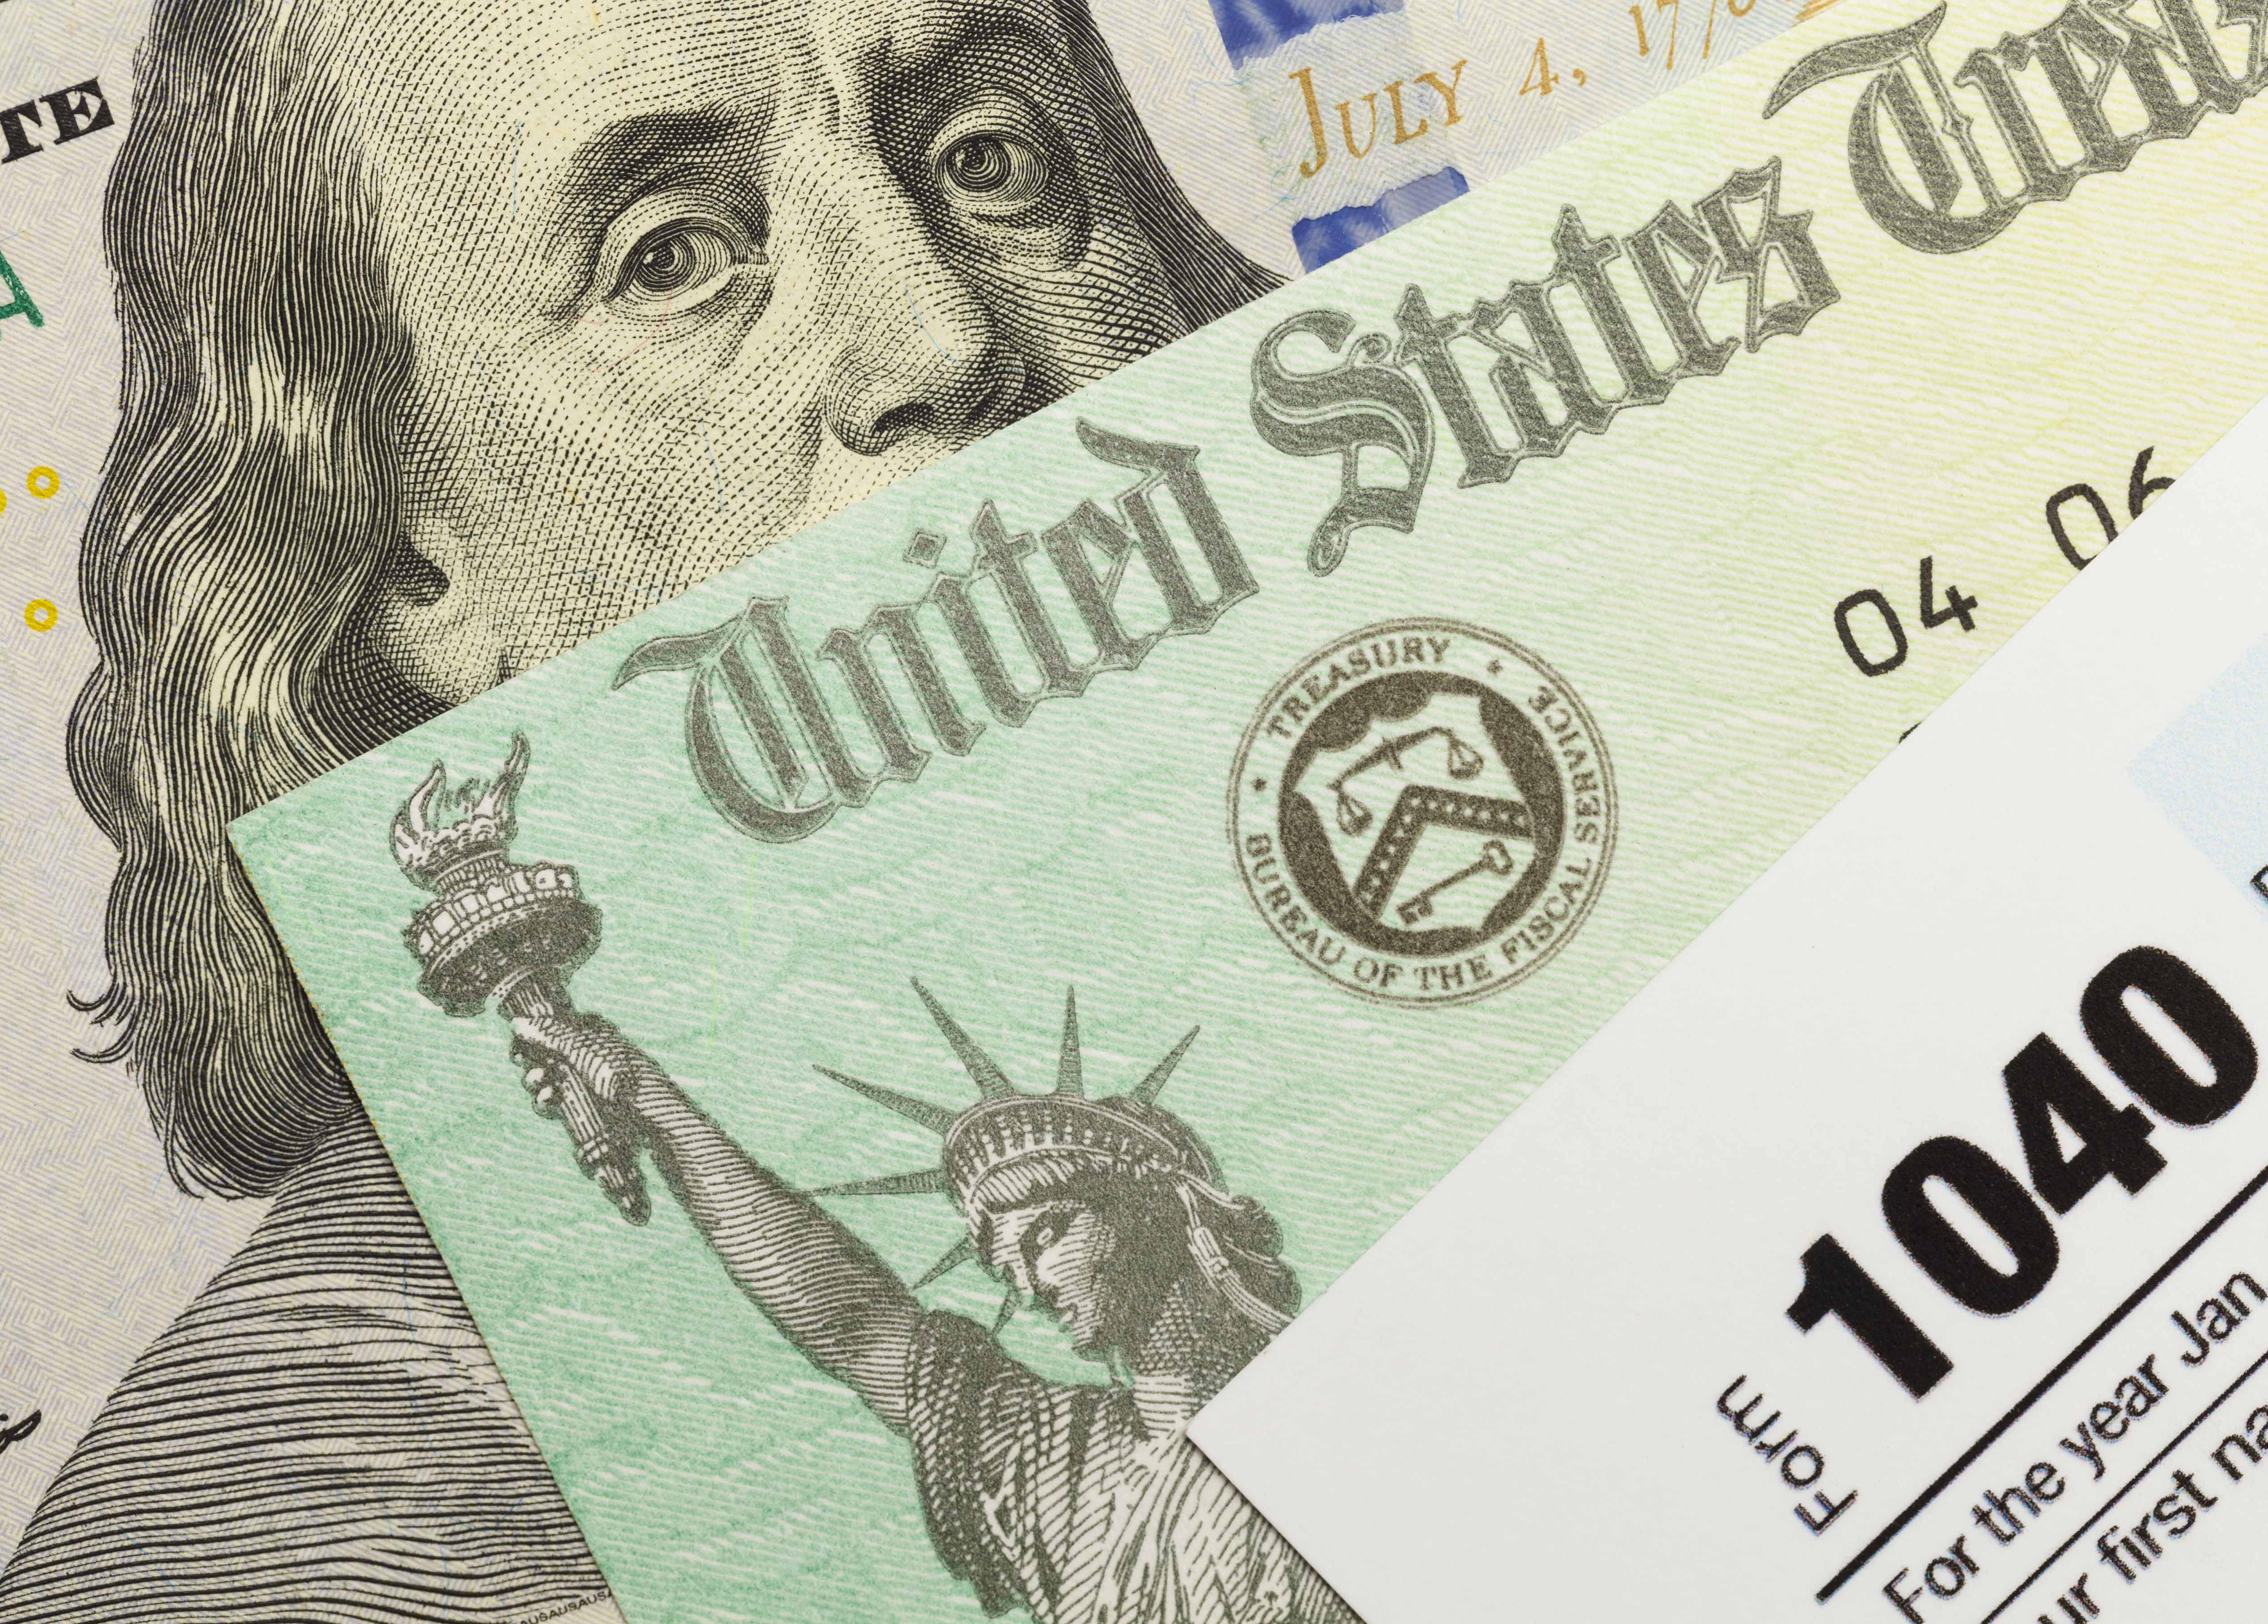 U.S. 1040 form against a backdrop of a U.S. Treasury Check